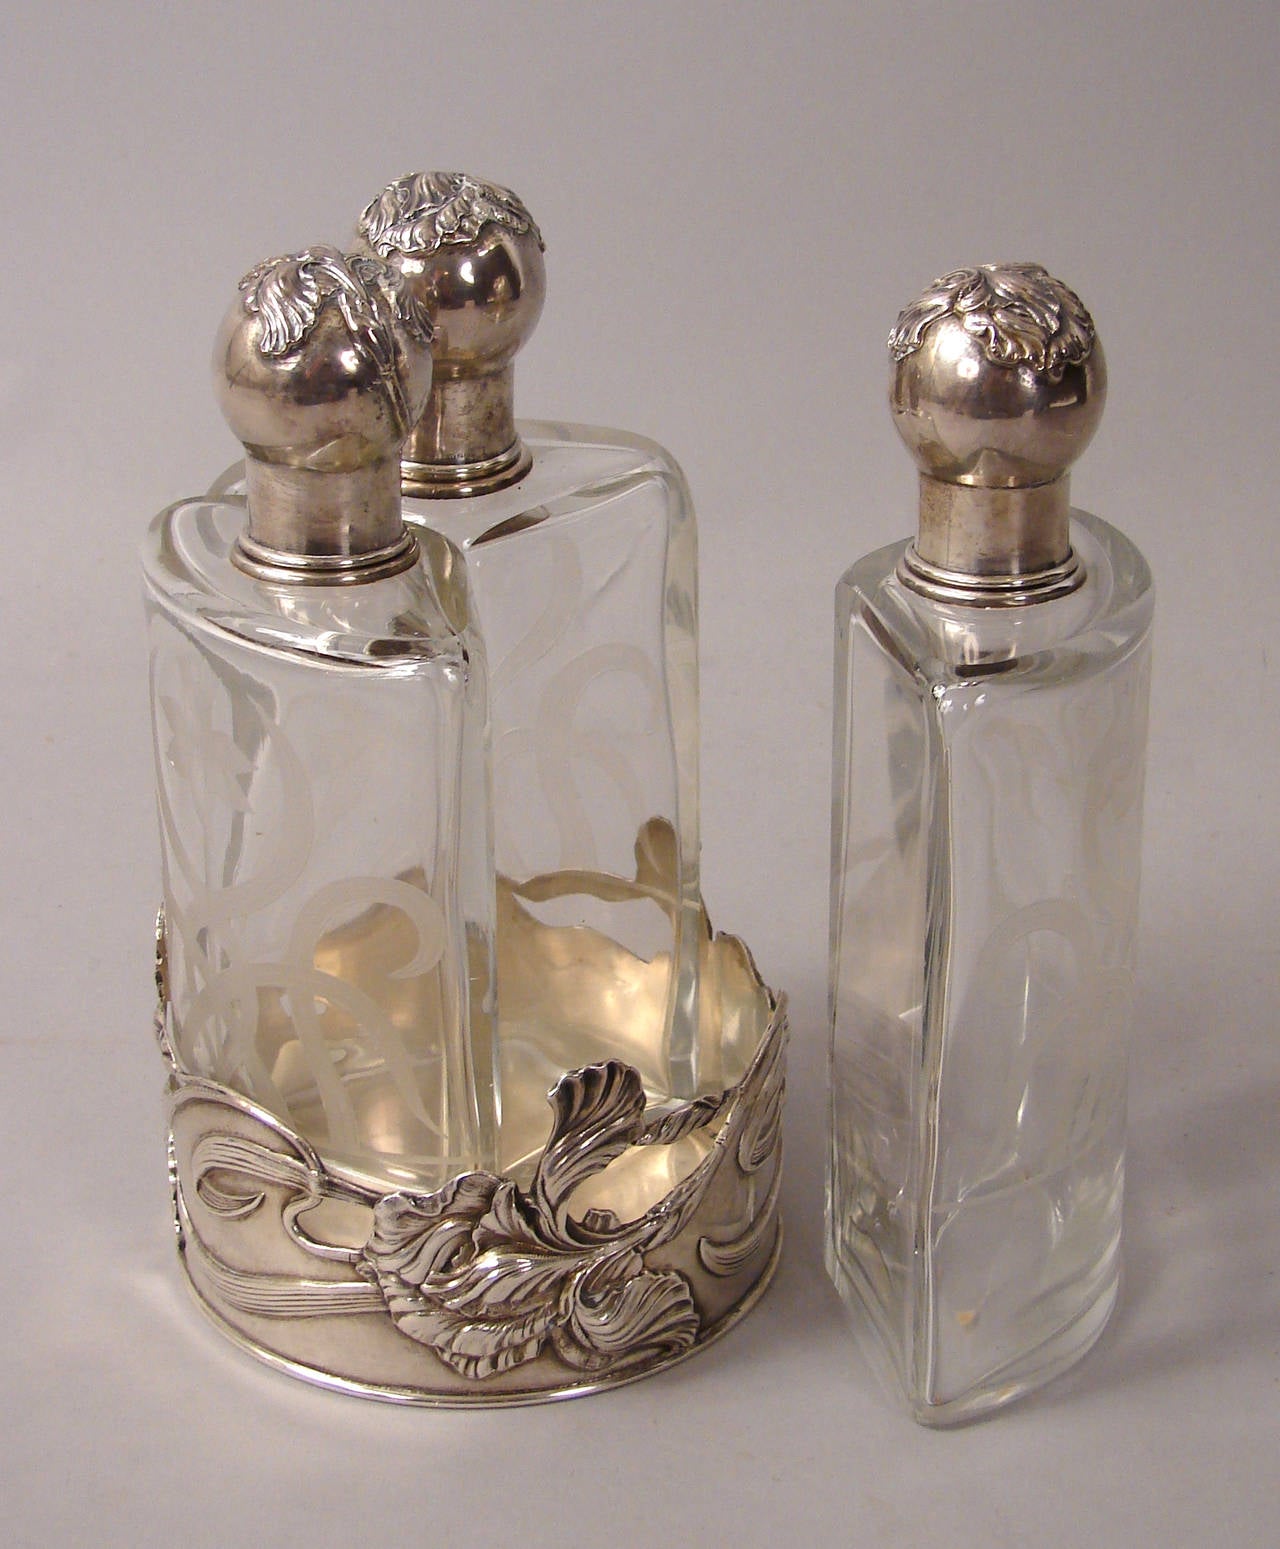 American Rare Art Nouveau Three Bottle Decanter Set by Shreve & Co., San Francisco